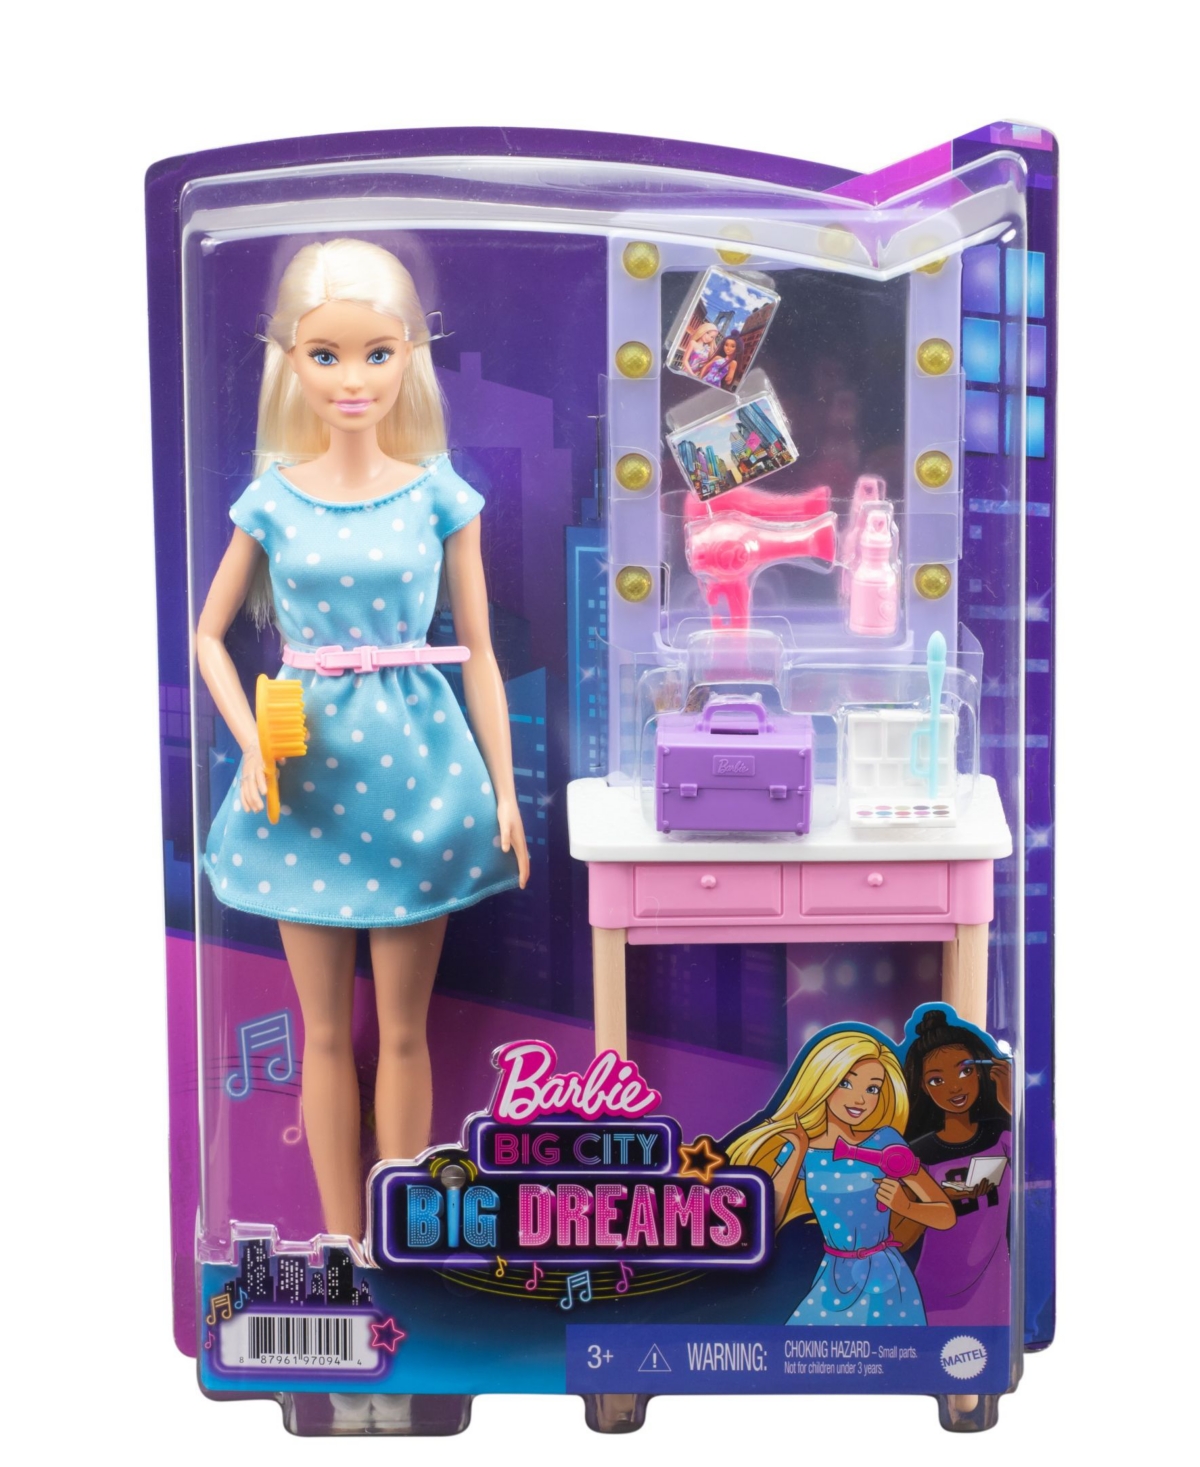 Barbie Big City Big Dreams Vanity Doll and Play Set